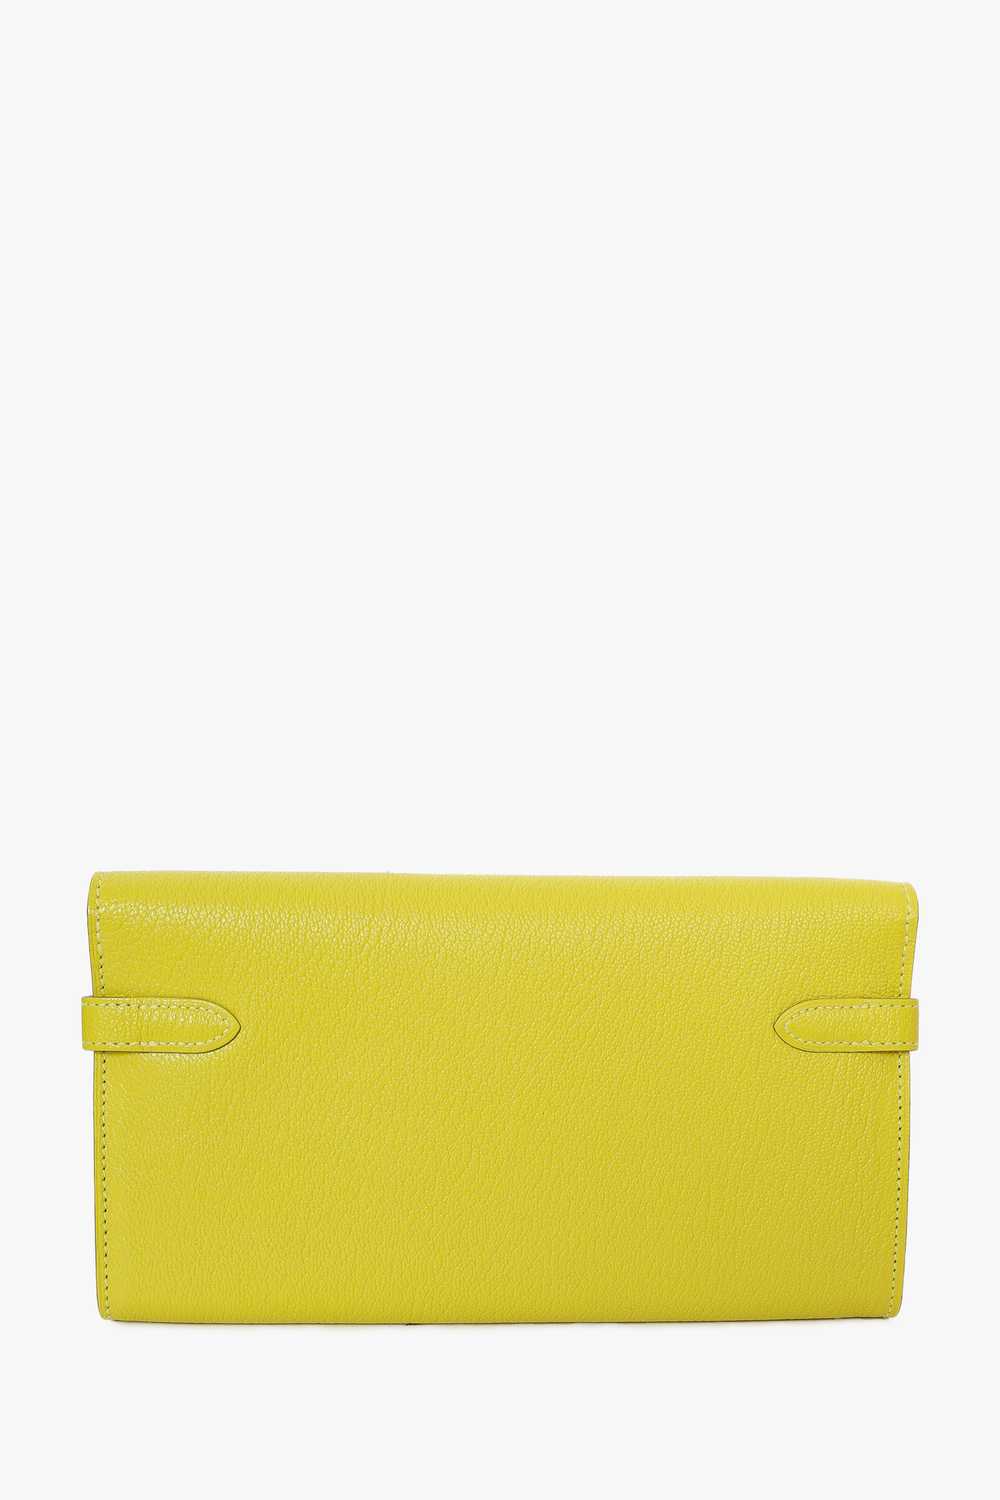 Hermès 2017 Yellow Chevre Leather Kelly Wallet - image 2